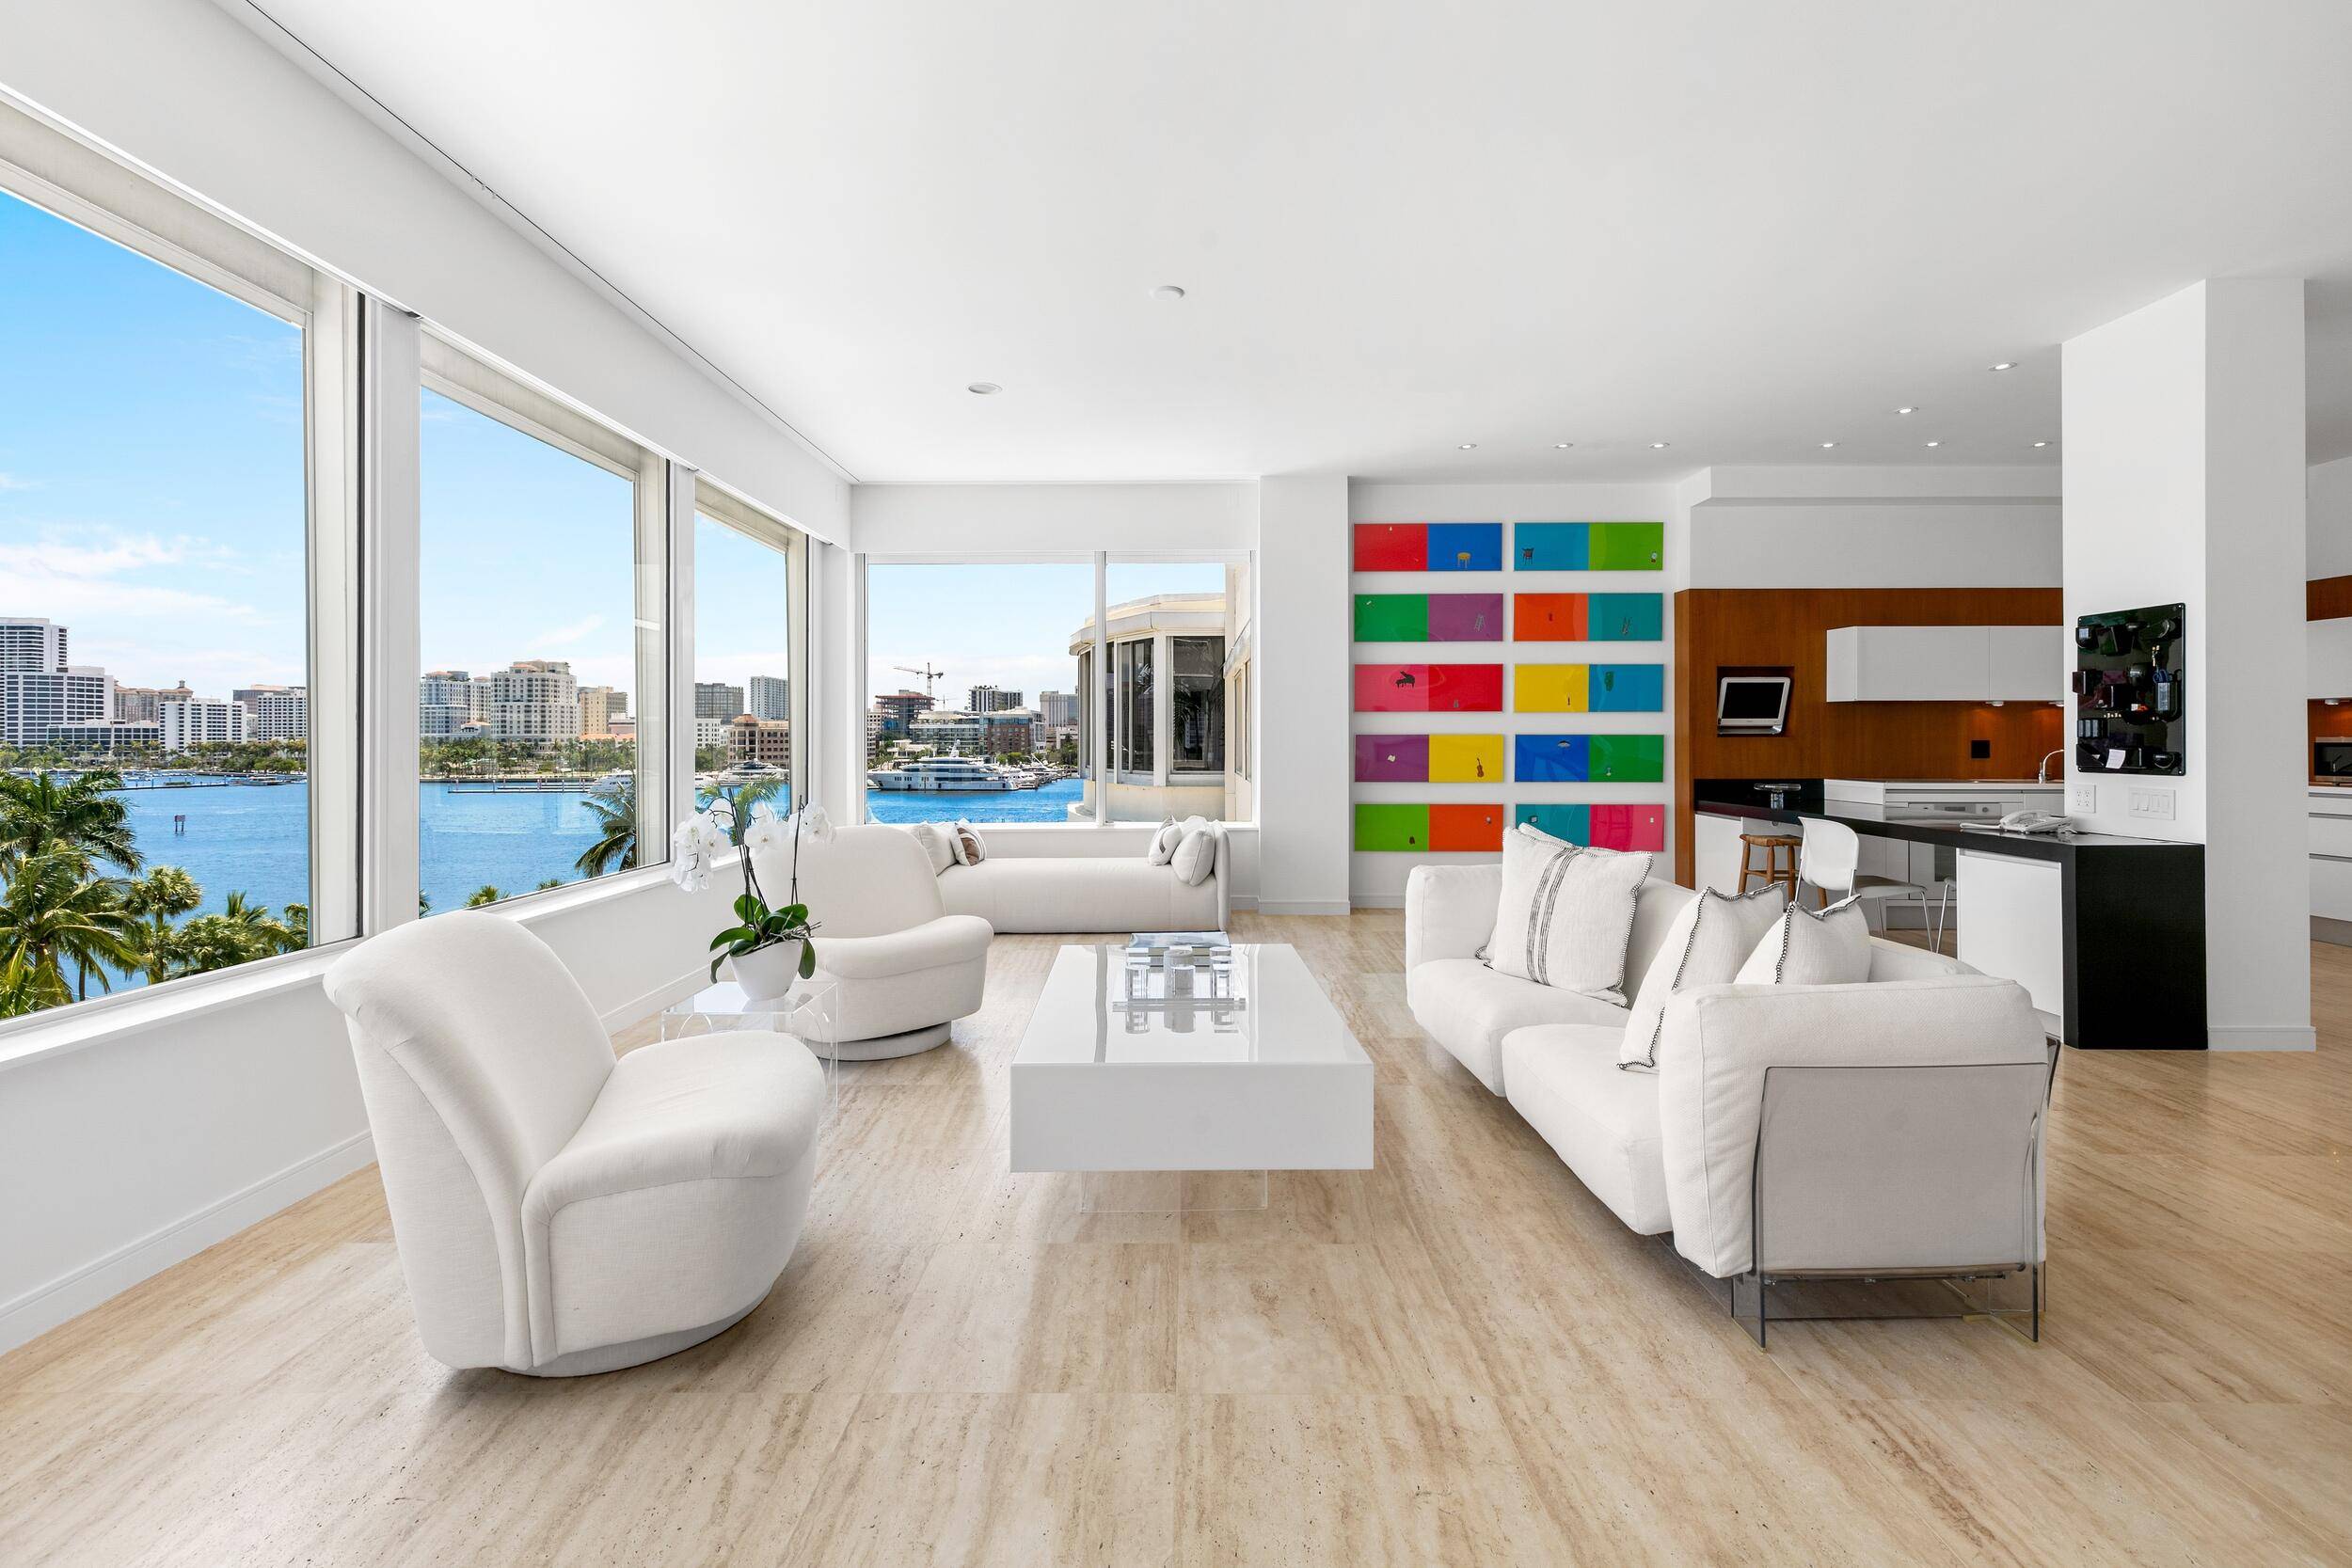 Beautiful Lakefront studio apartment with fabulous open floor plan.